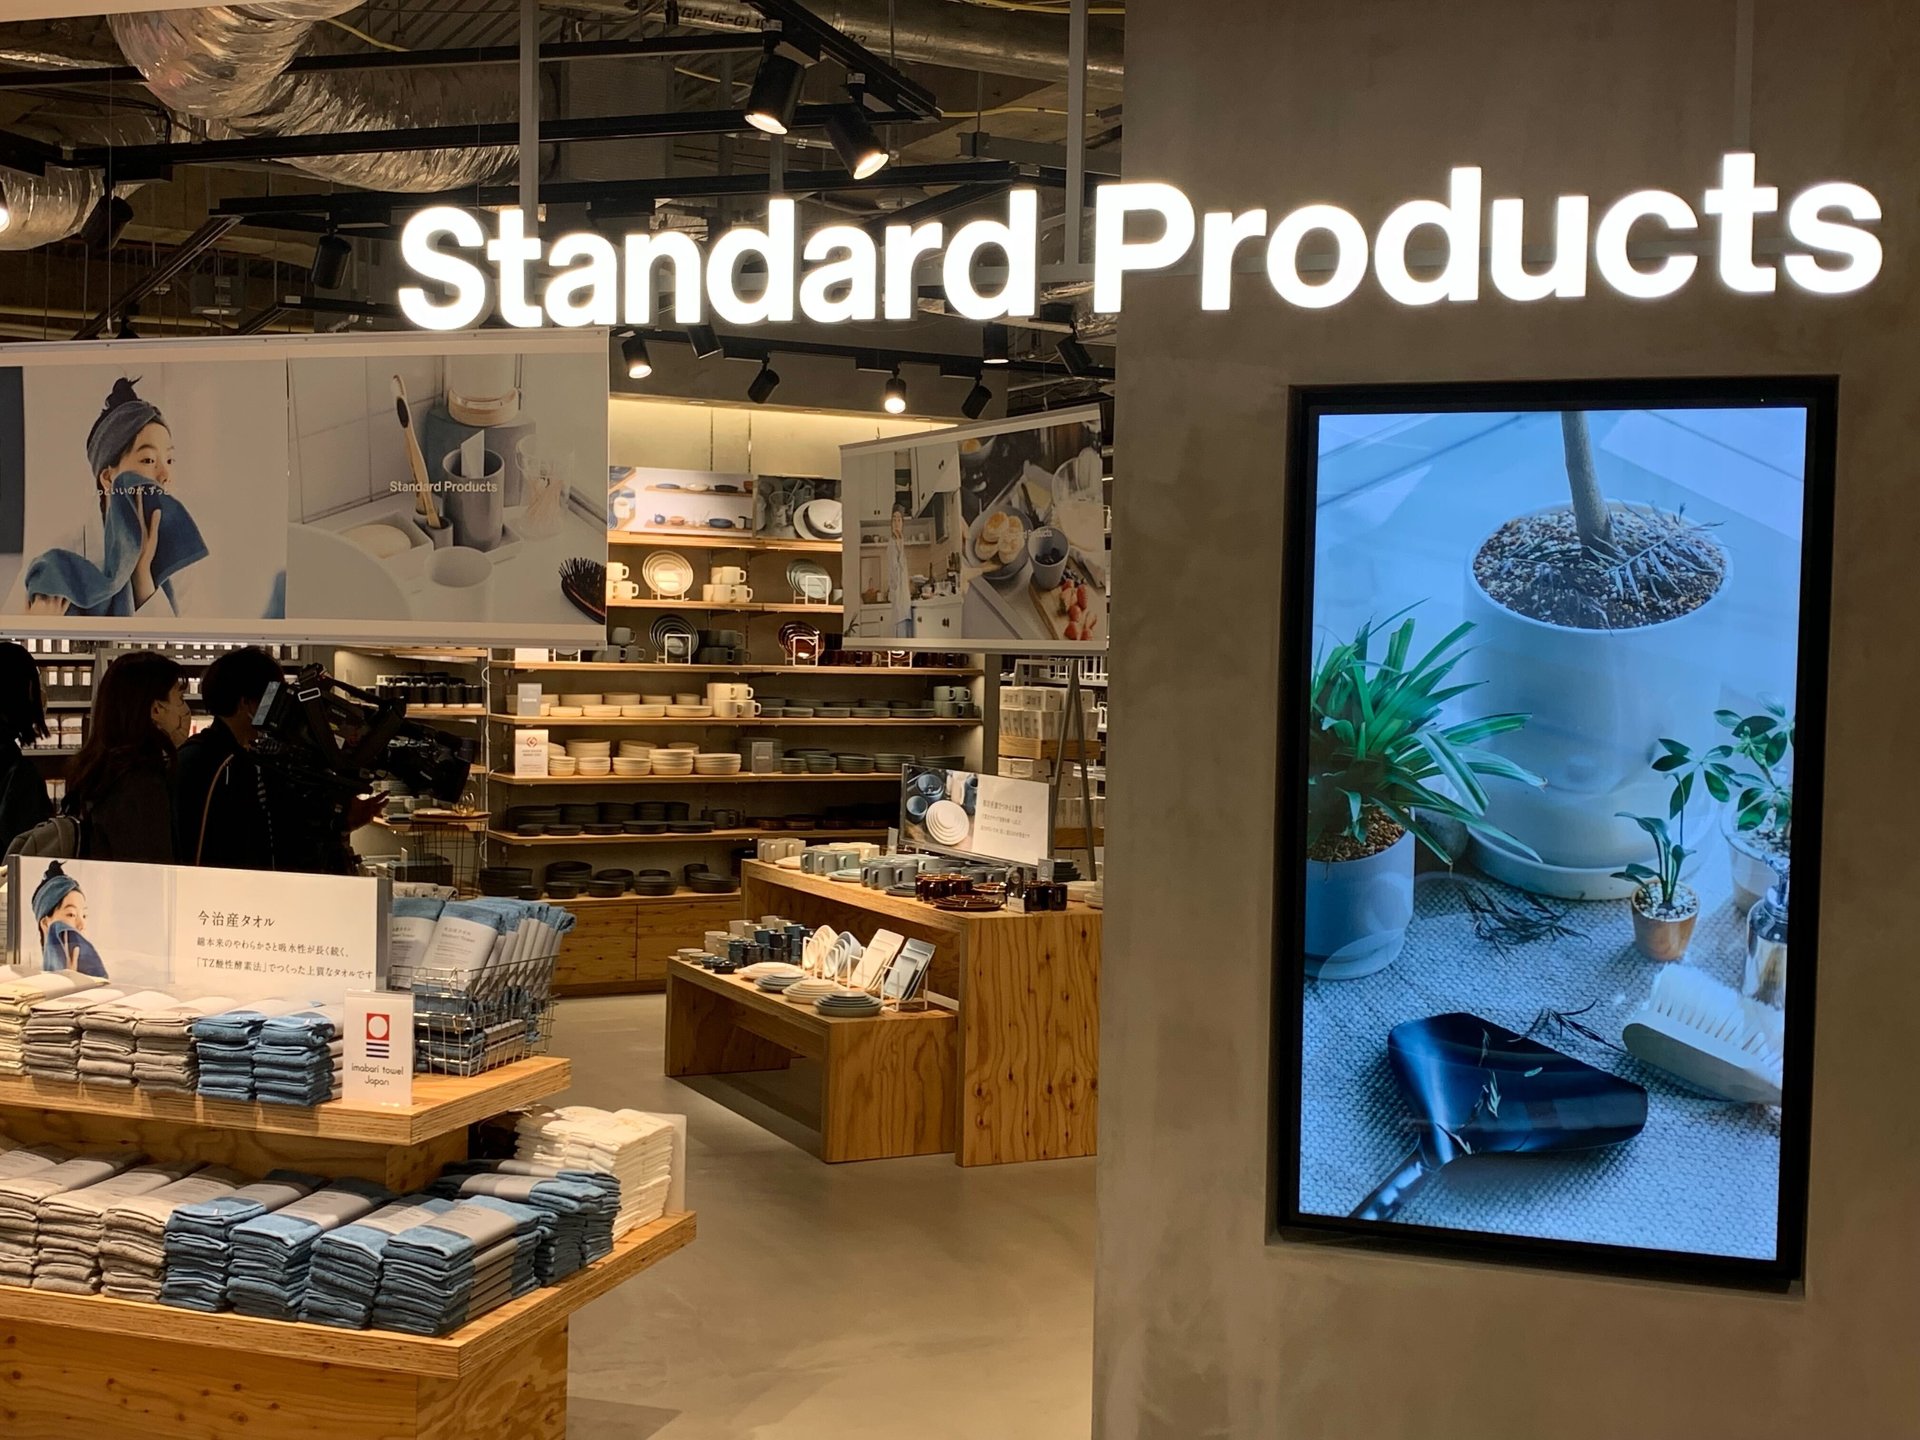 Standard Productsは渋谷、新宿店に次ぎ銀座が3店舗となる